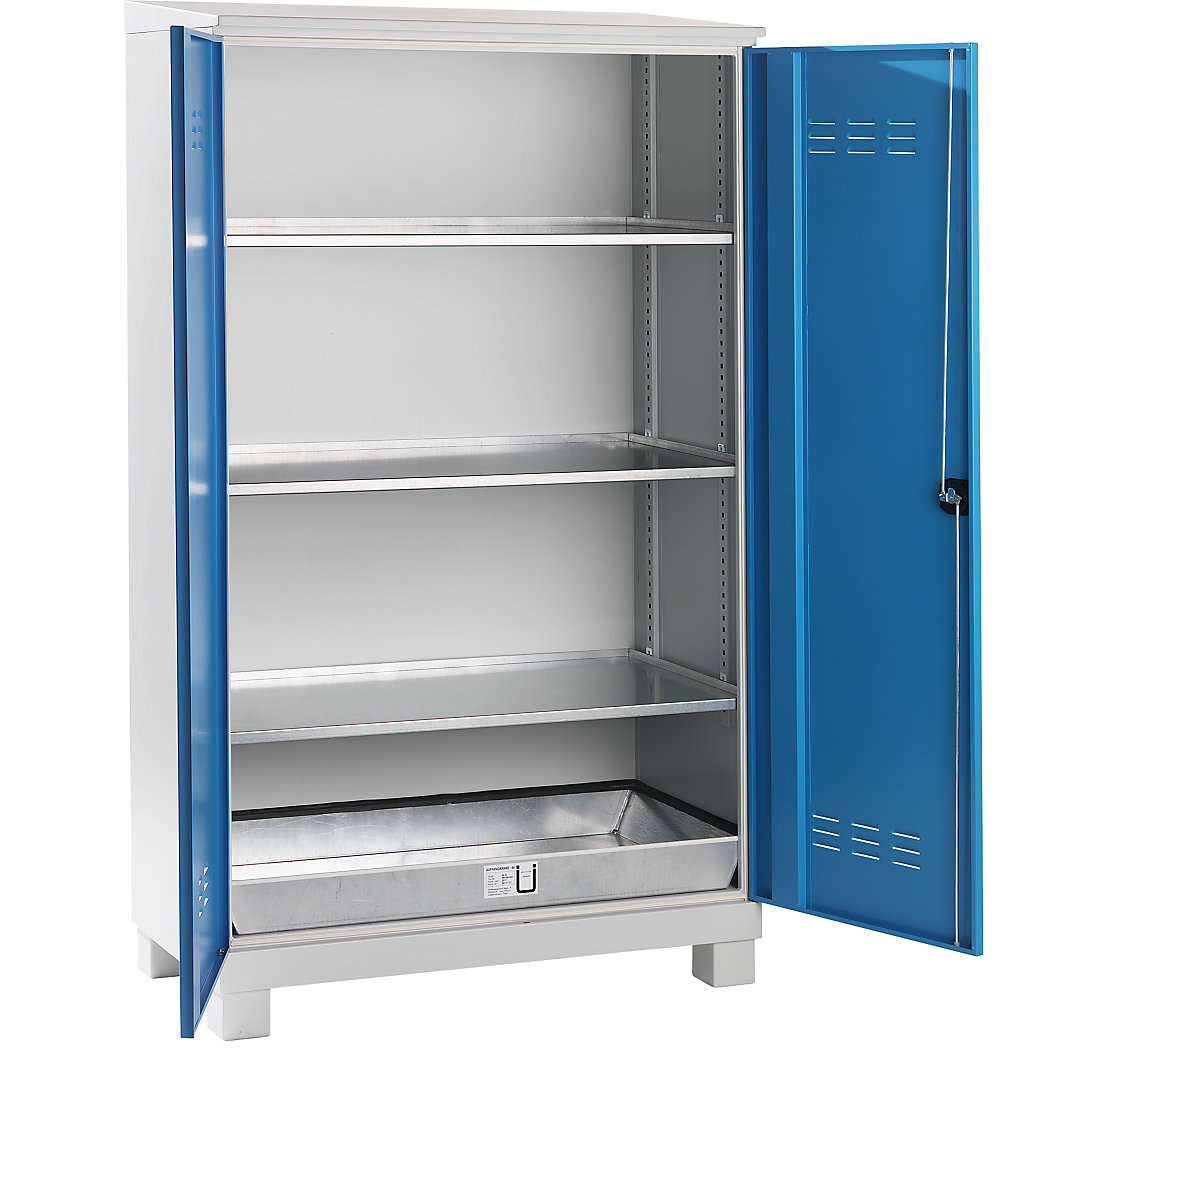 Environmental cupboard for outdoor storage - eurokraft pro